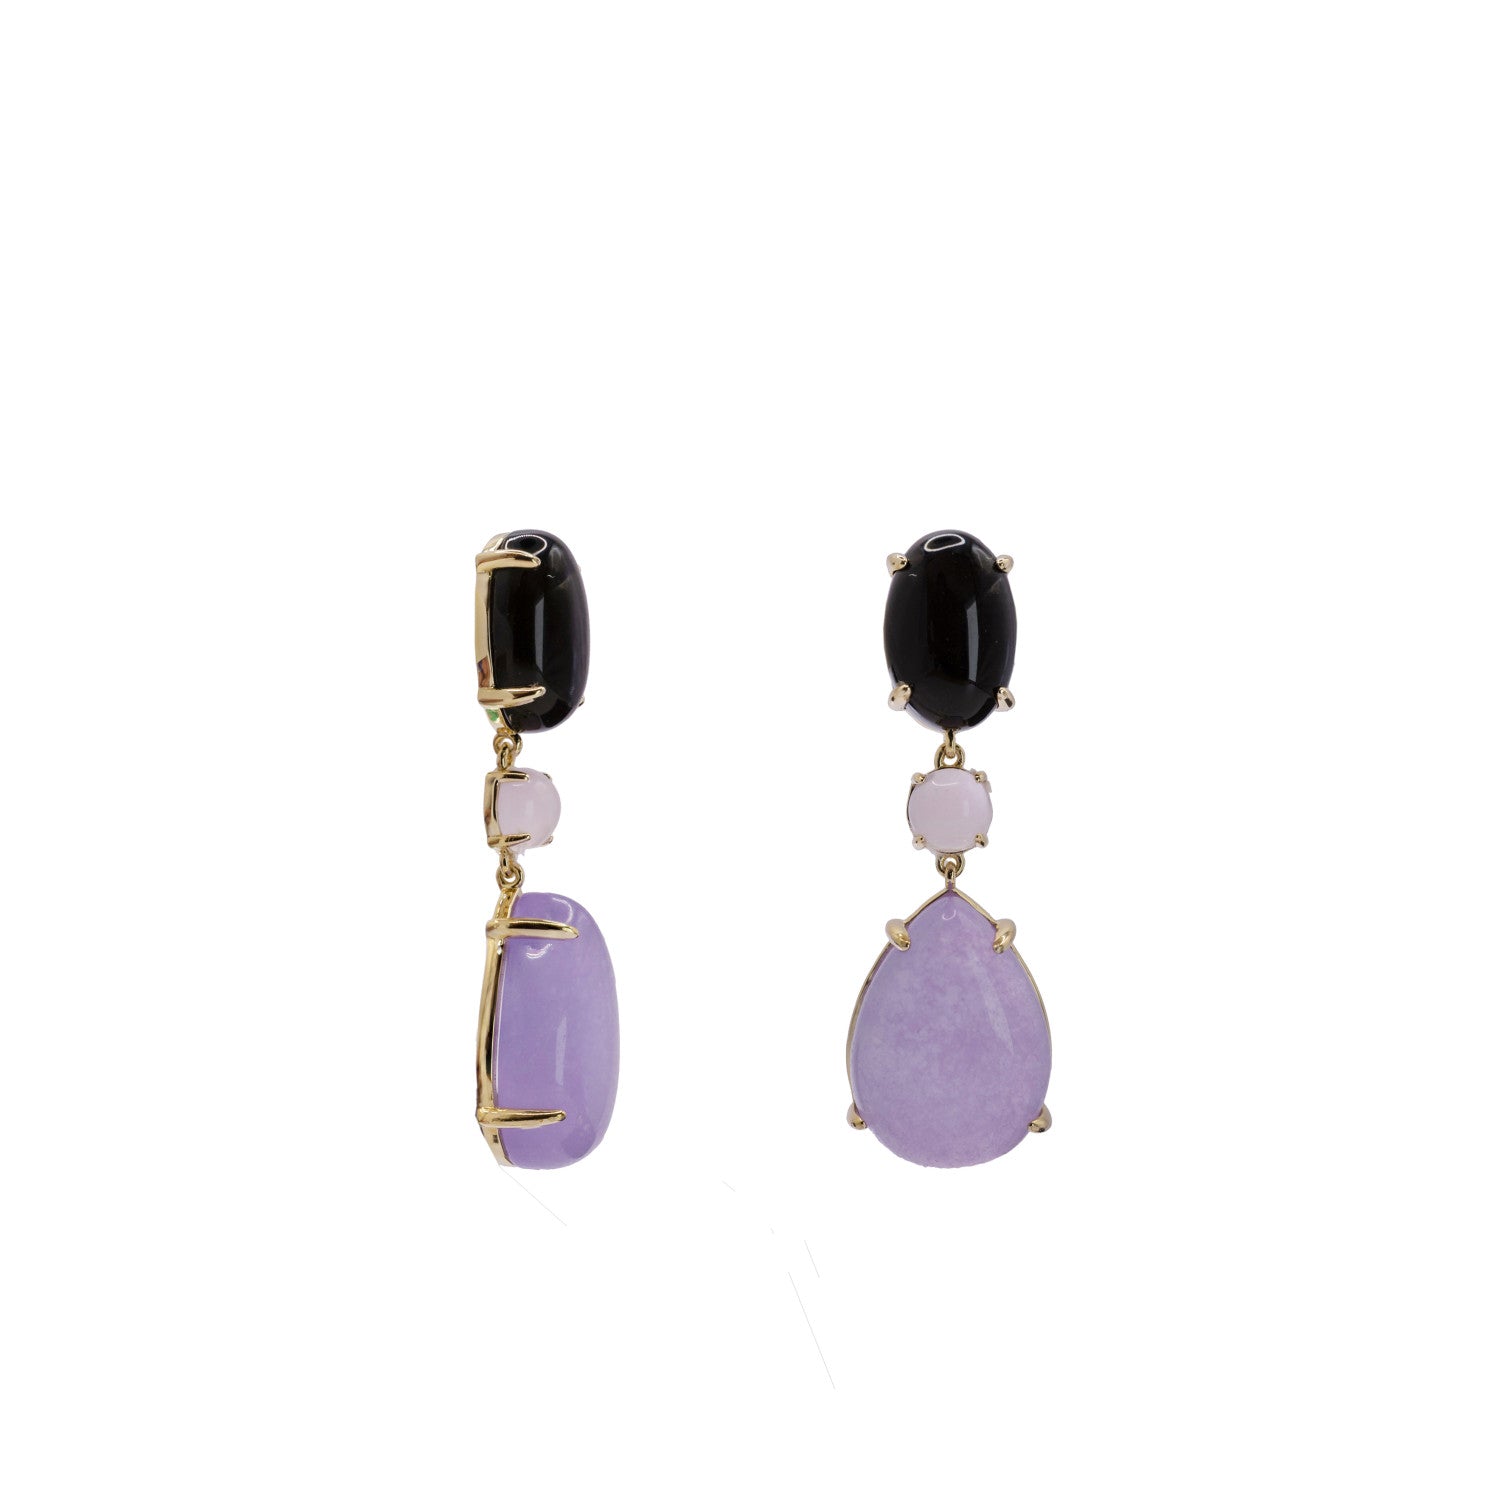 Long natural stone earrings in purple tones